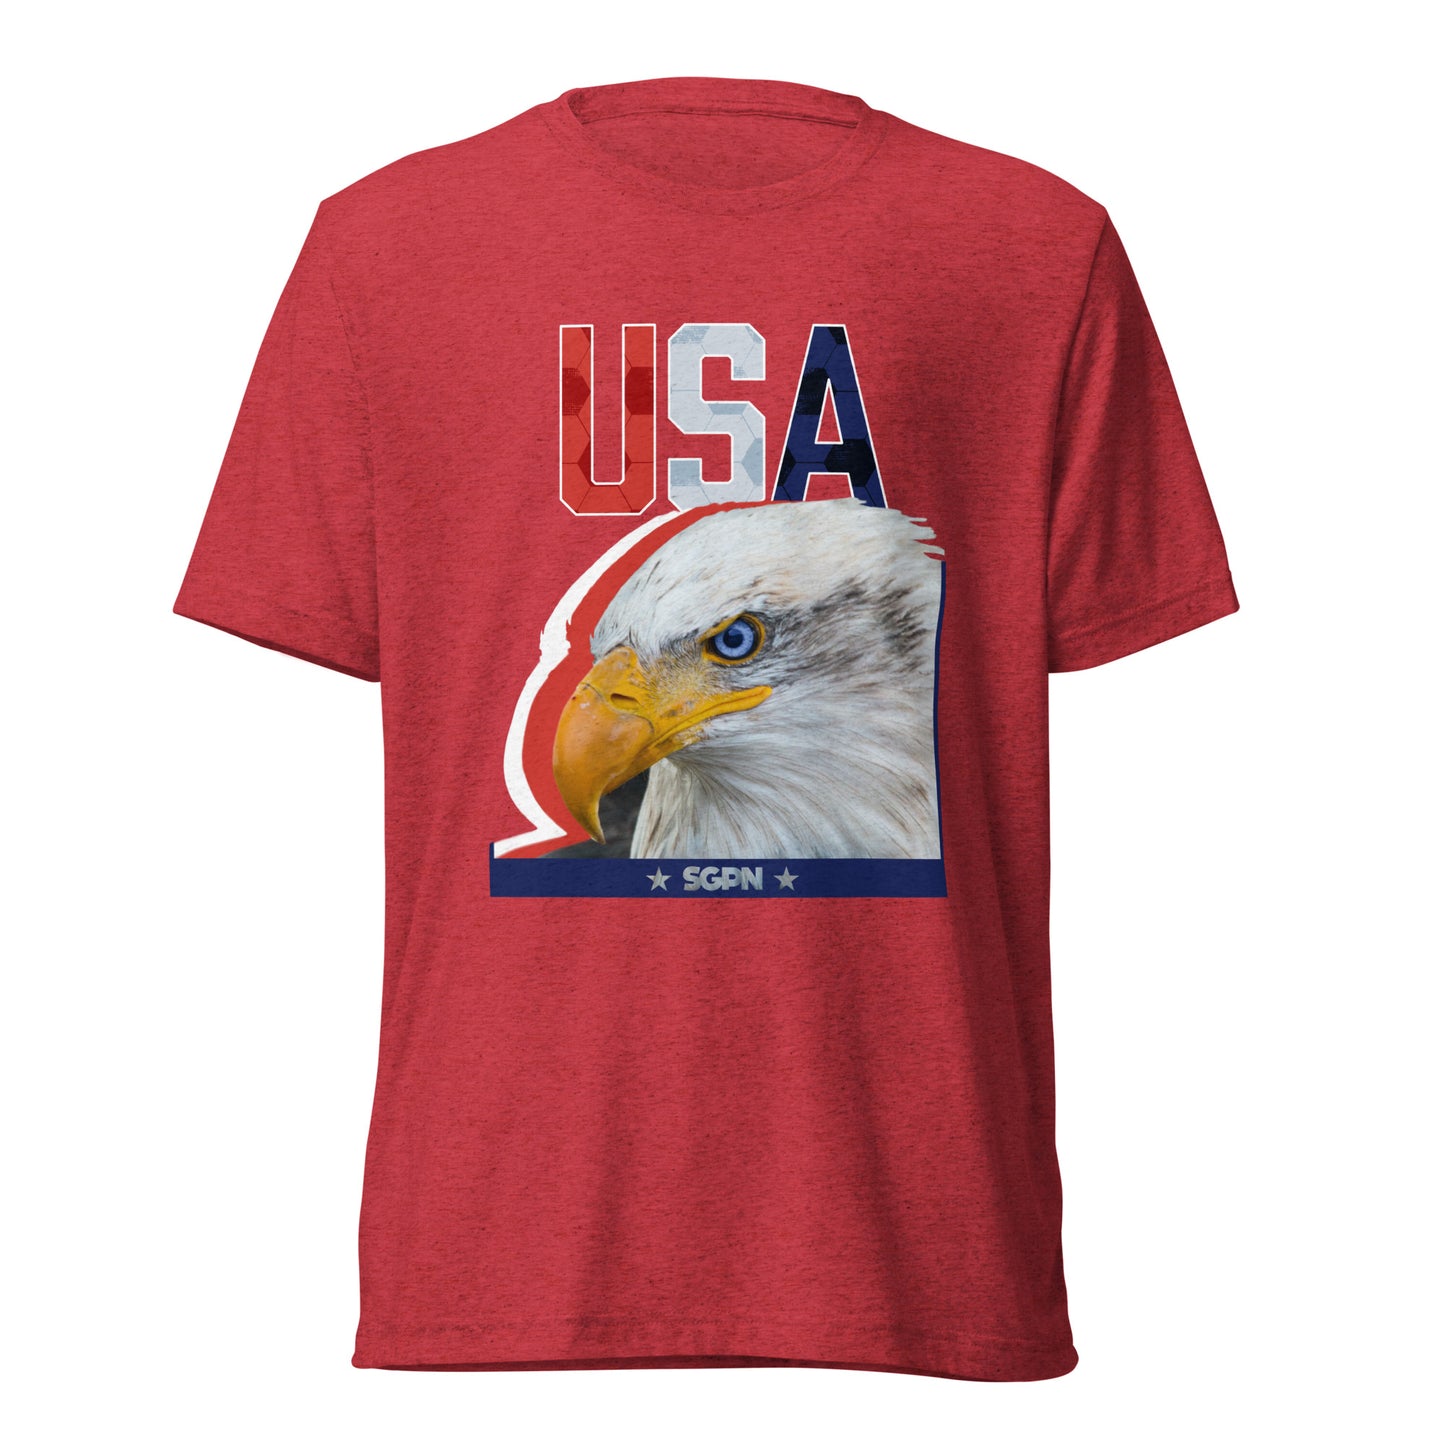 USA - SGPN - Short sleeve t-shirt